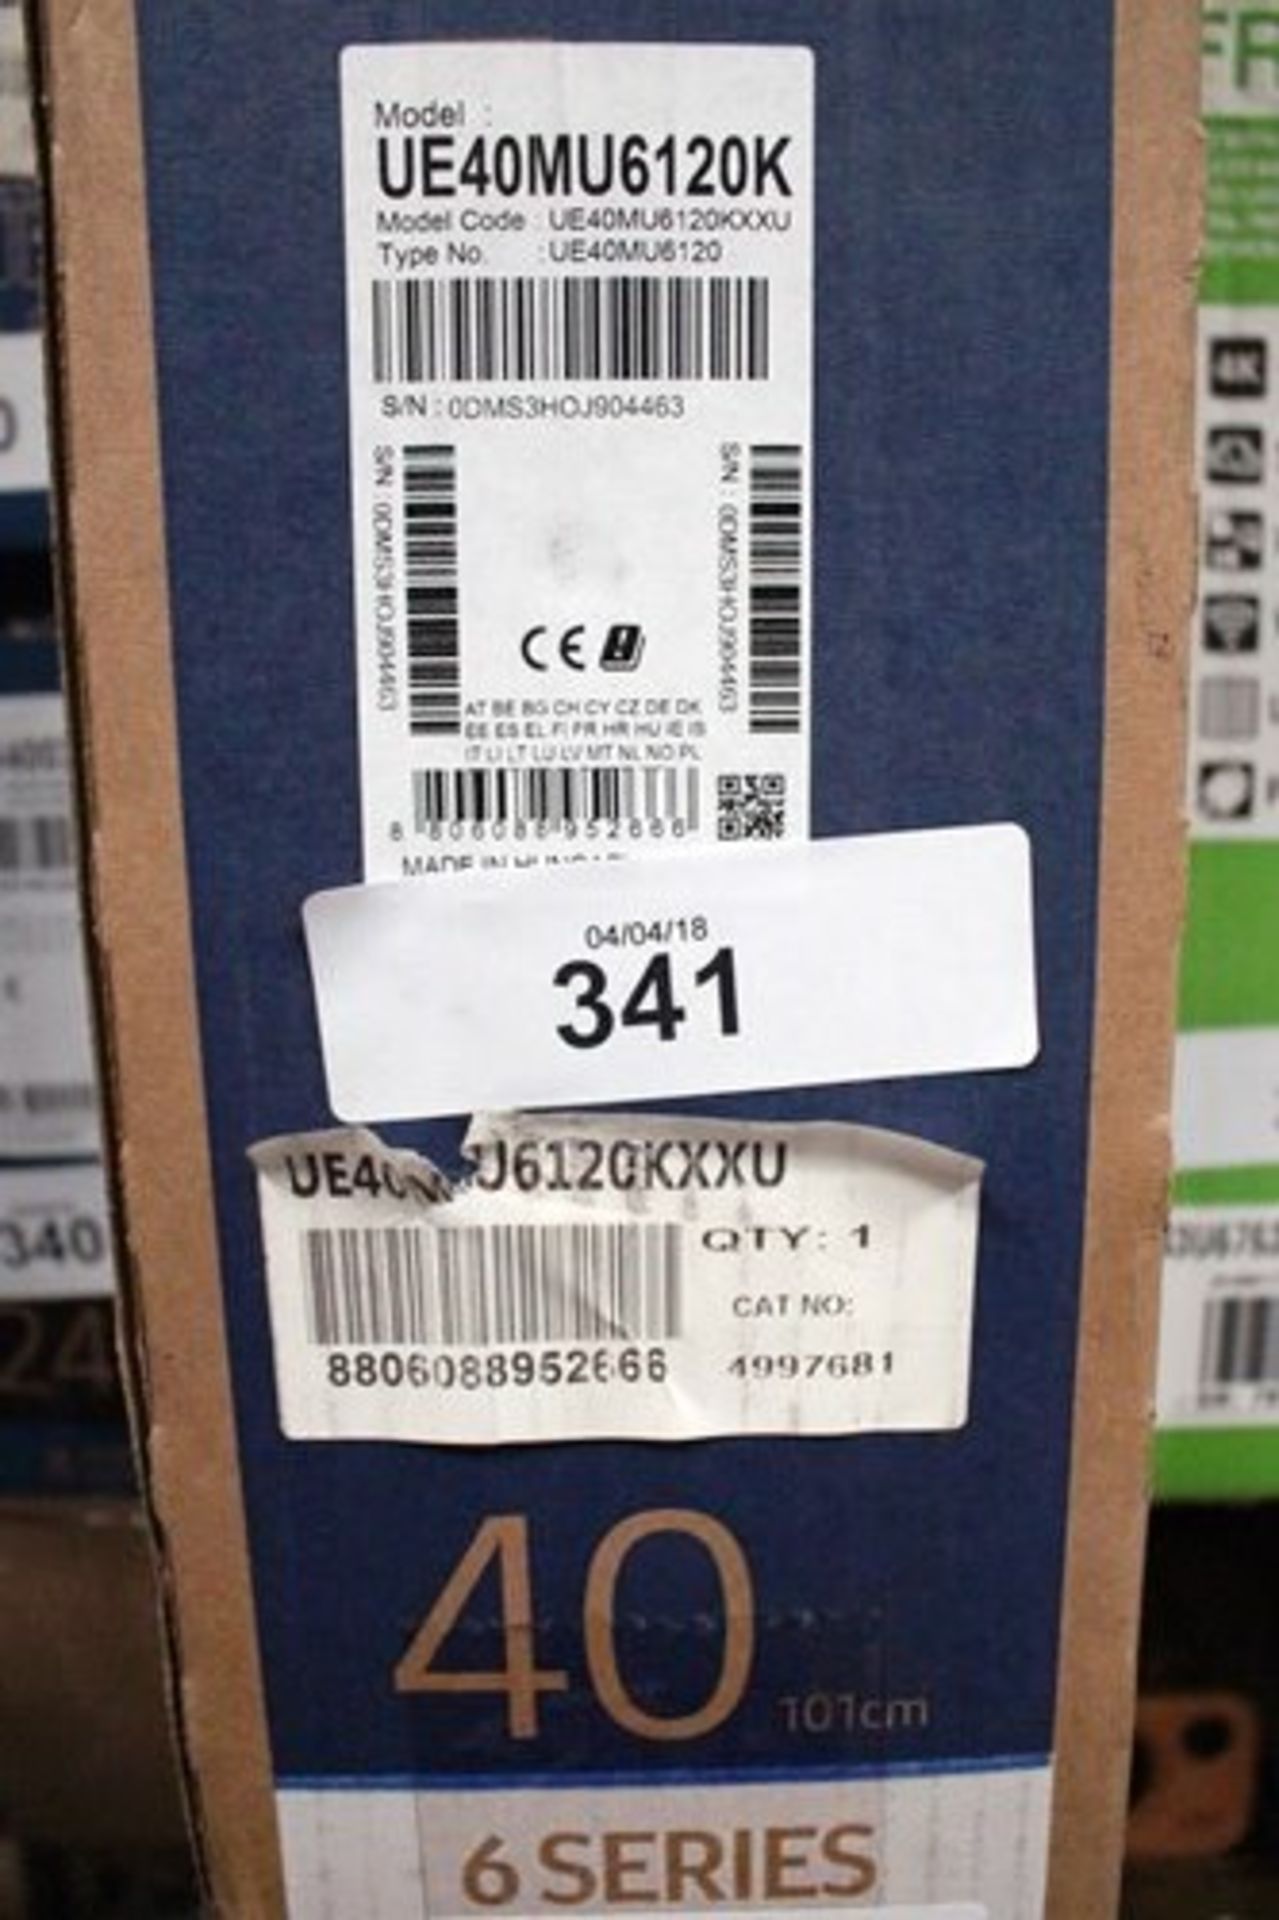 A Samsung 40" 6 Series TV, model UE40MU6120K - Sealed new in box (B4)